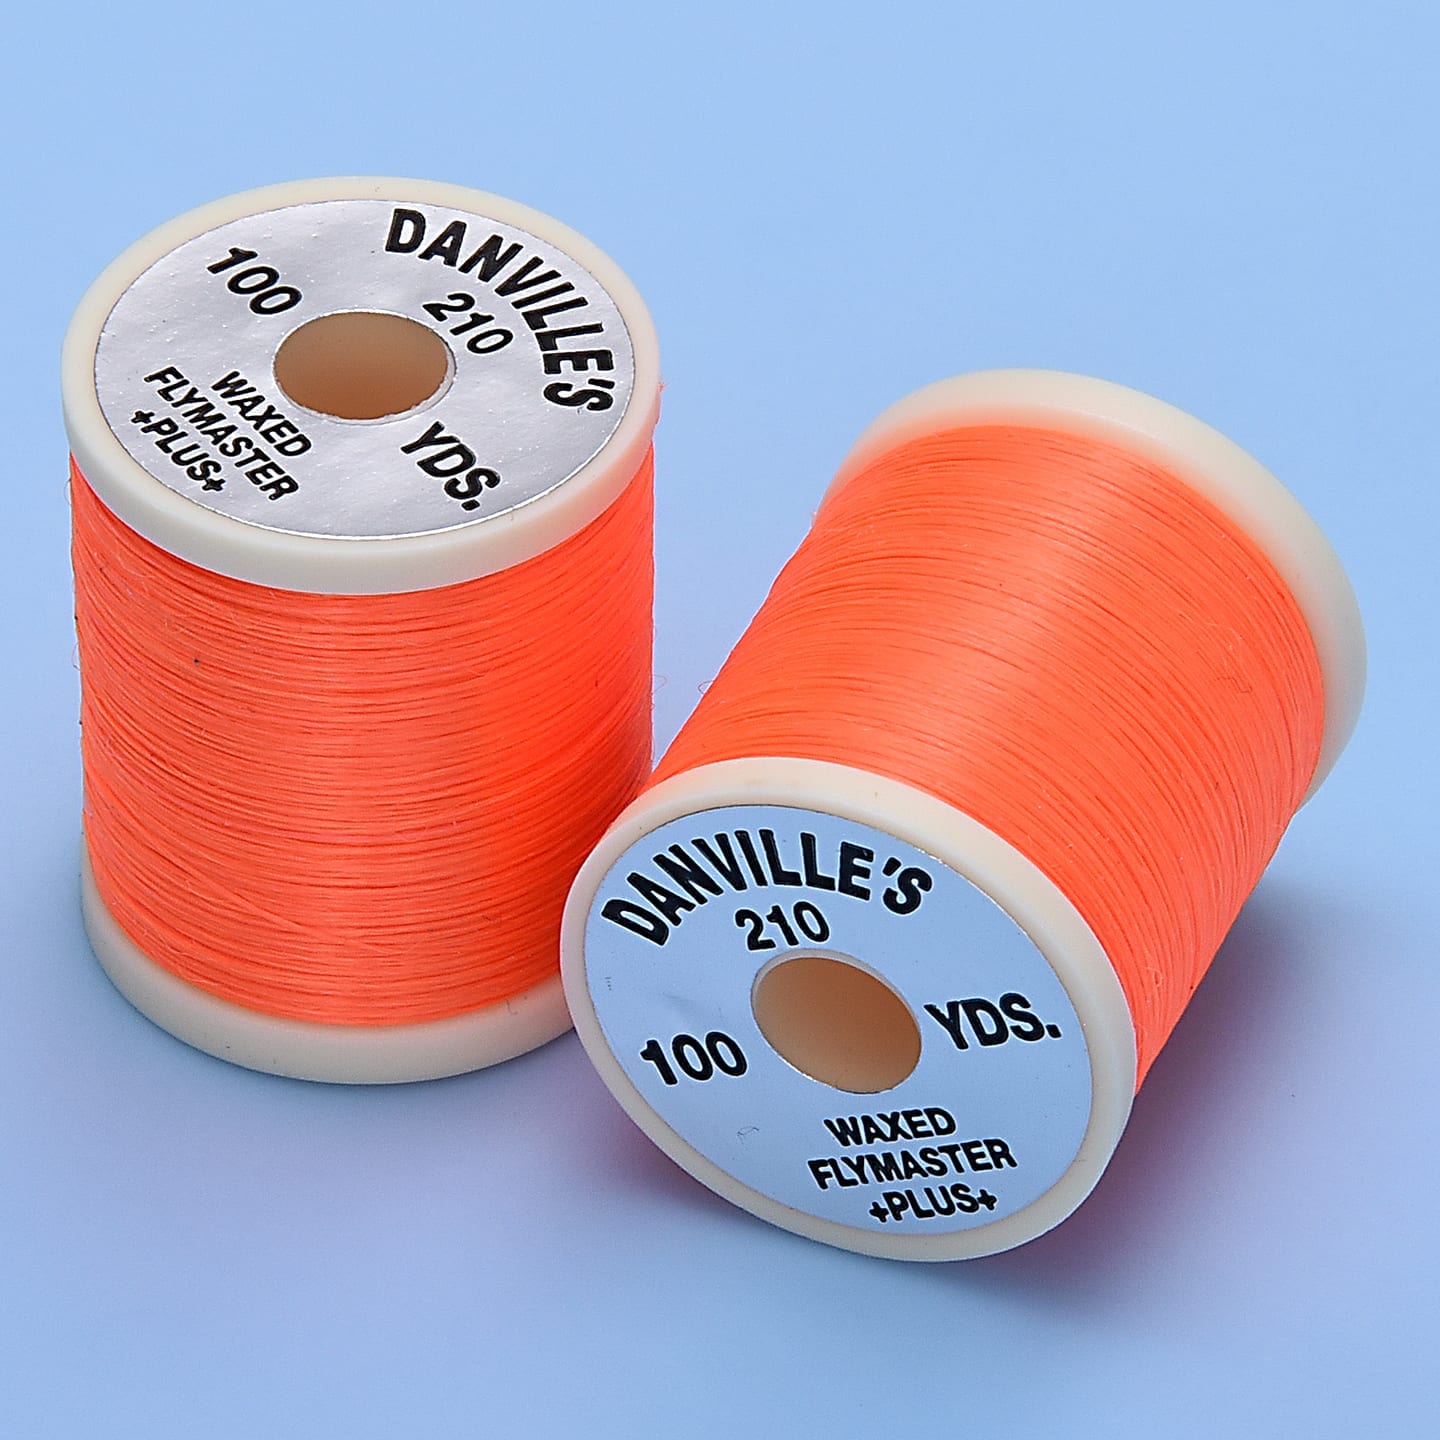 Danville Flymaster Plus 3/0 Waxed Thread (210 Denier)-Fly Fishing - Fly Tying Material-Danville's-FL Orange-Fishing Station